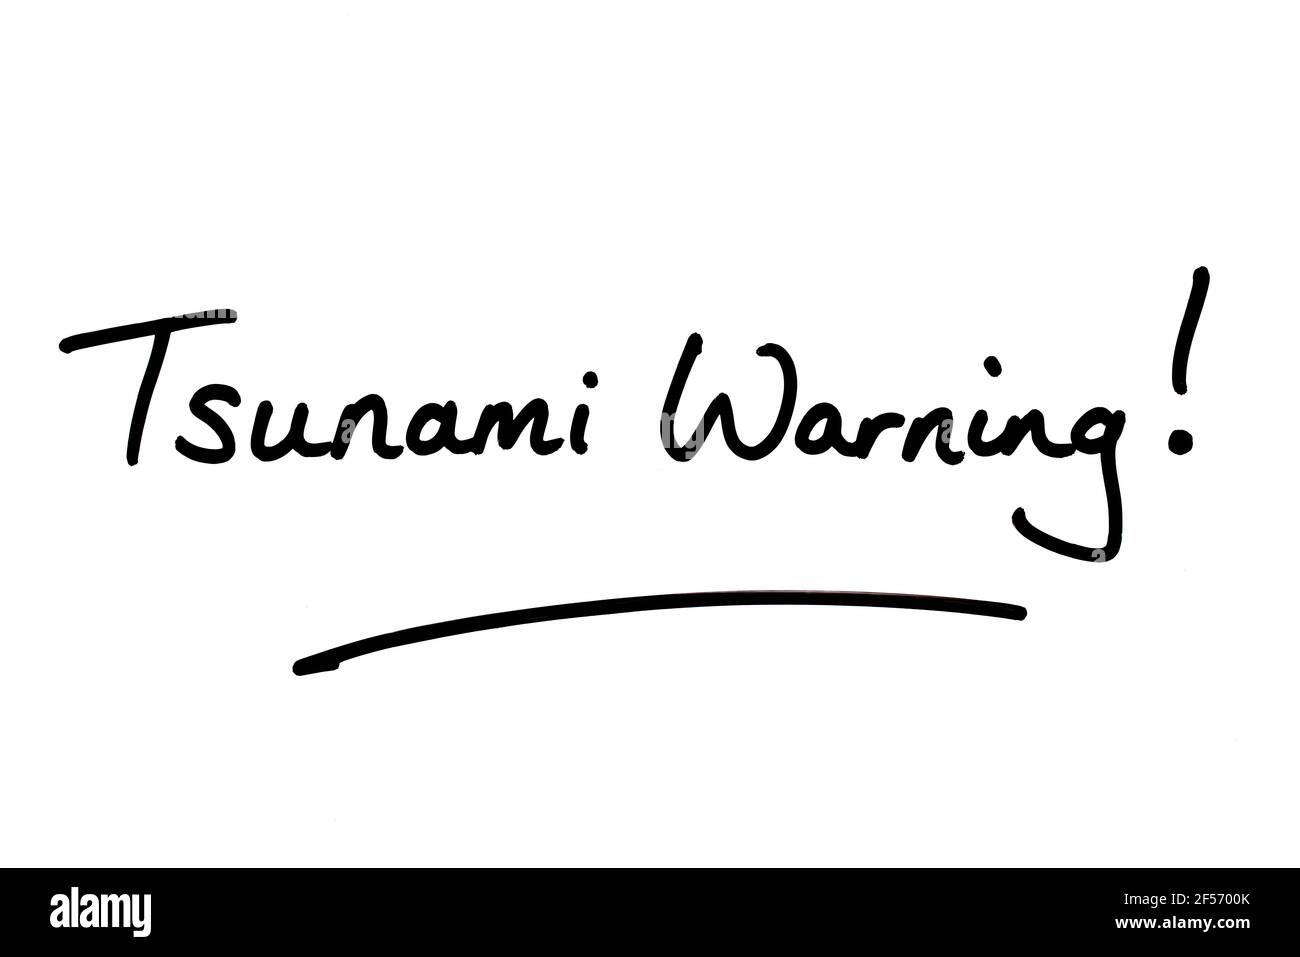 Tsunami Warning! handwritten on a white background. Stock Photo